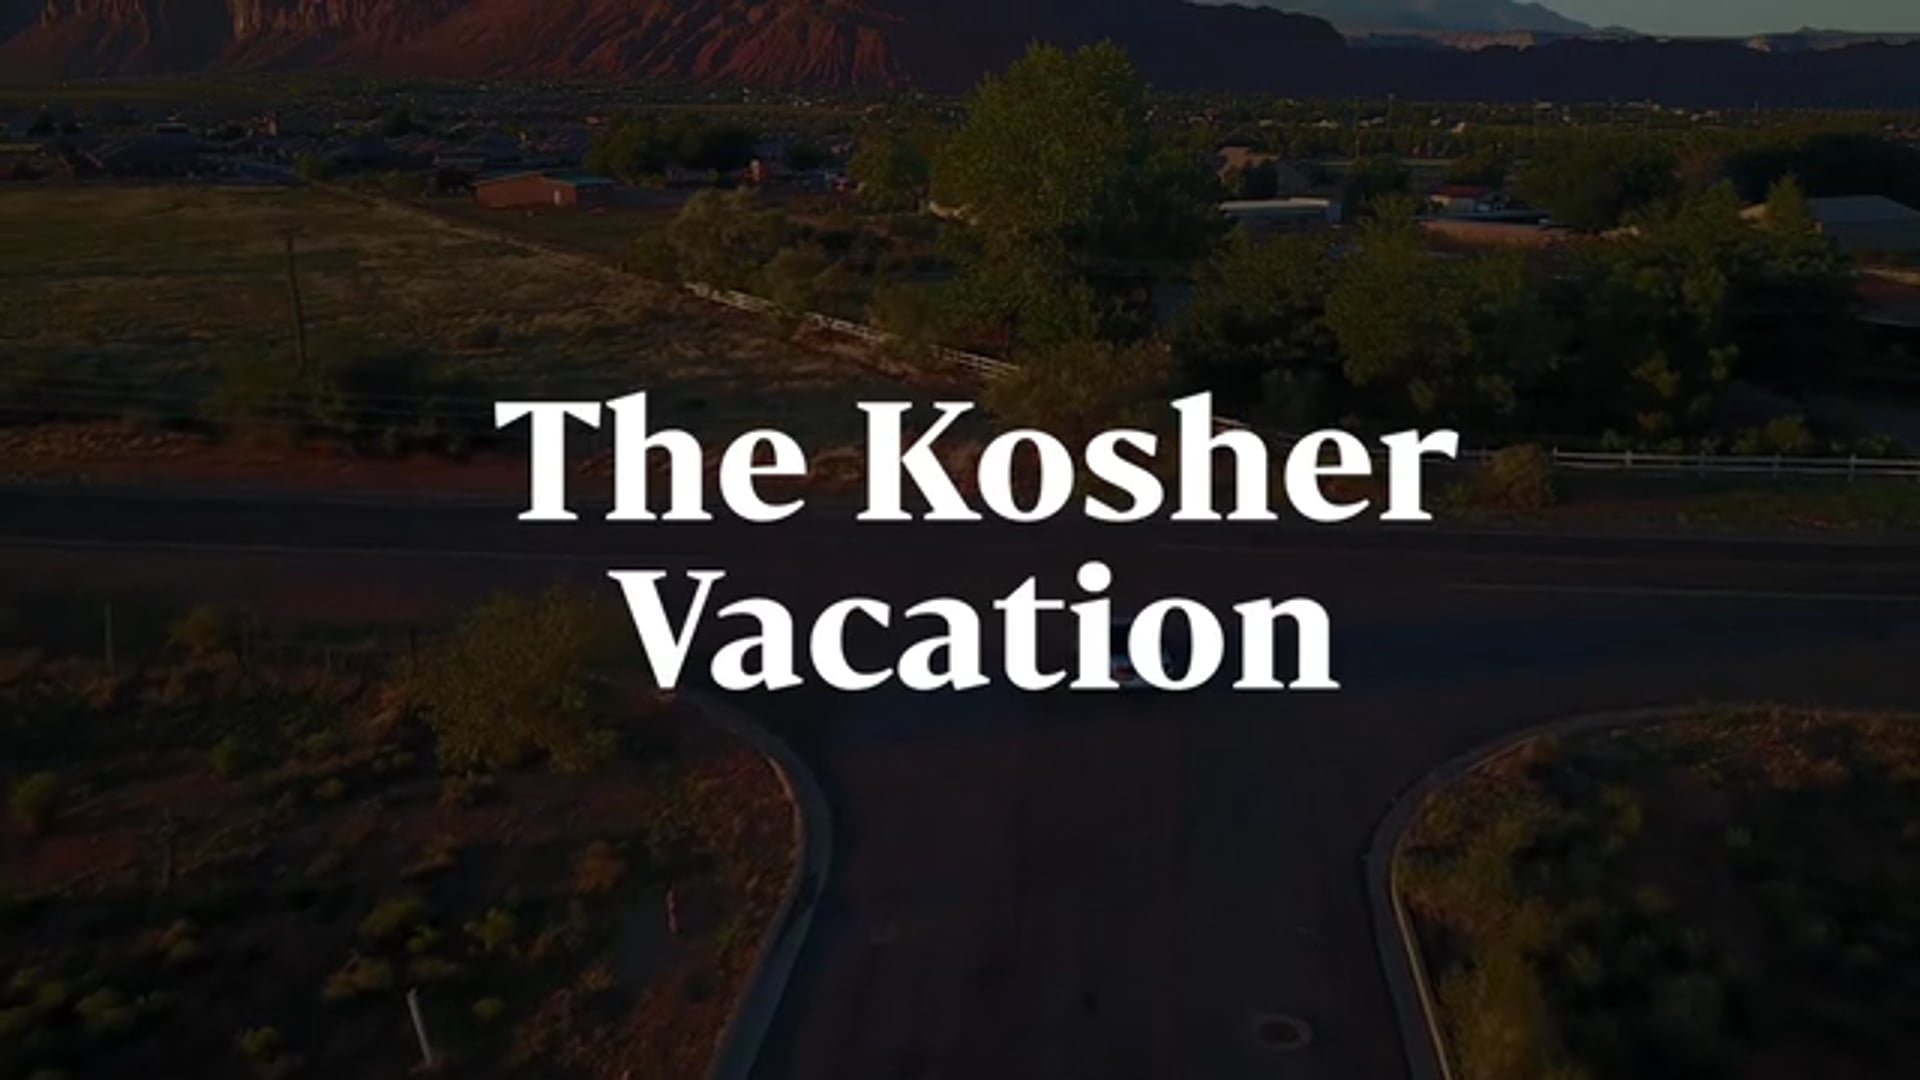 Ben Yomo: The Kosher Vacation